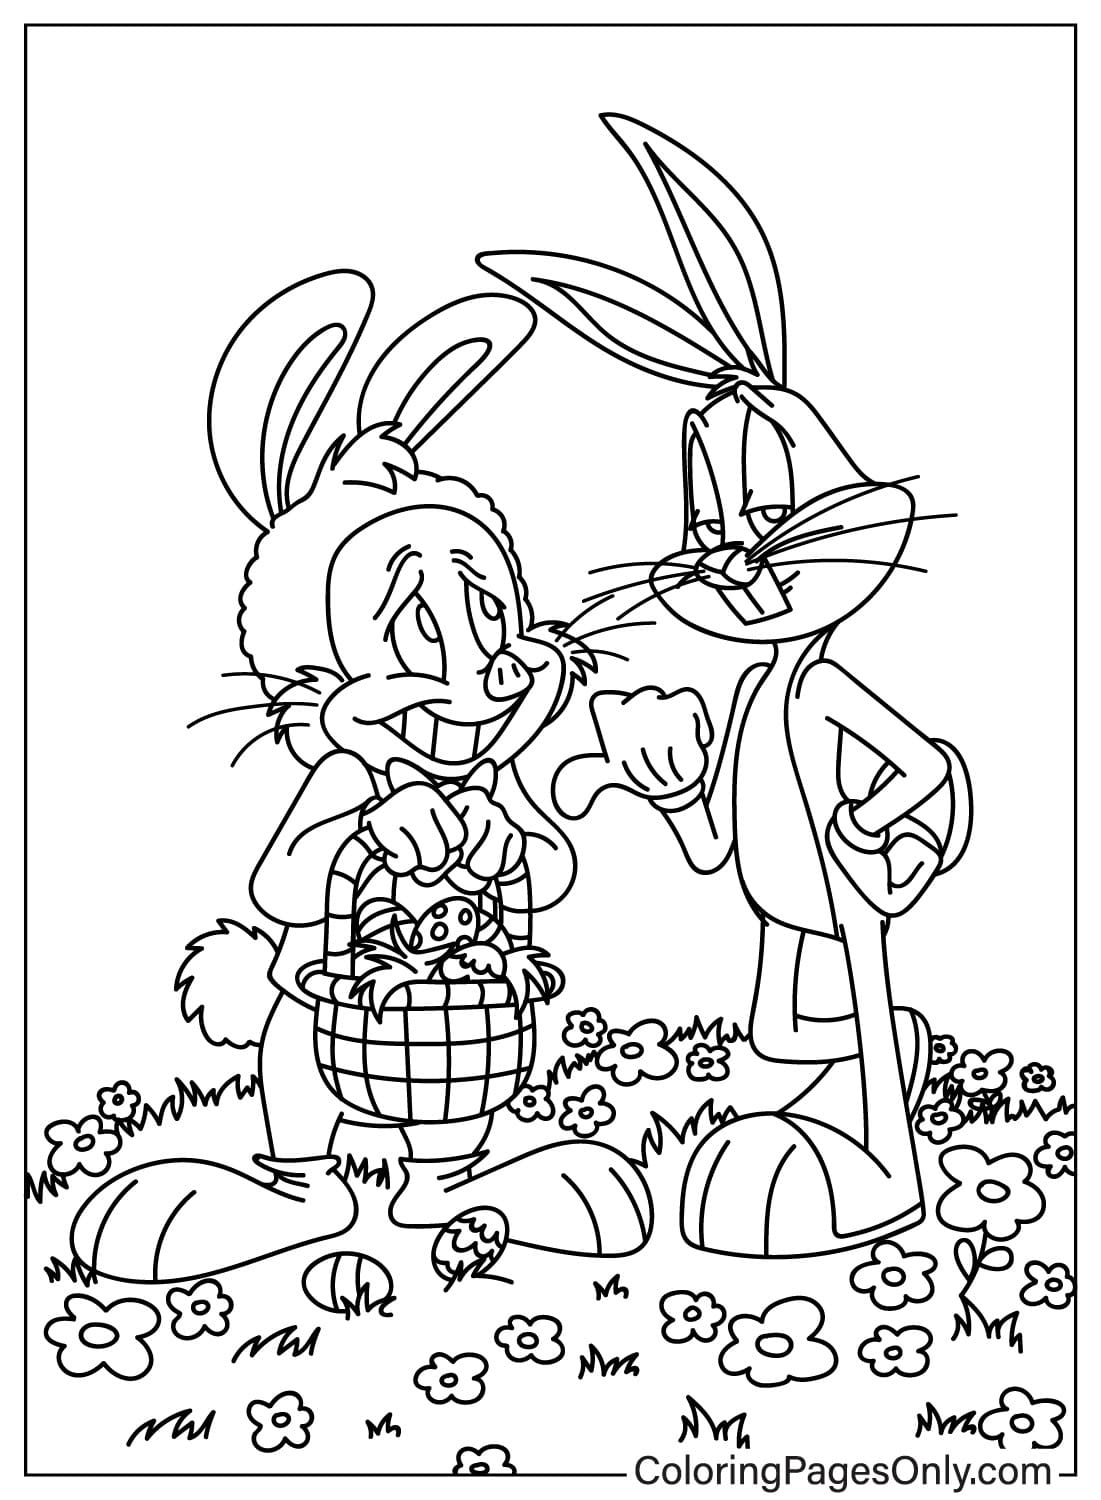 Página para colorear de Bugs Bunny de Pascua de dibujos animados de Pascua